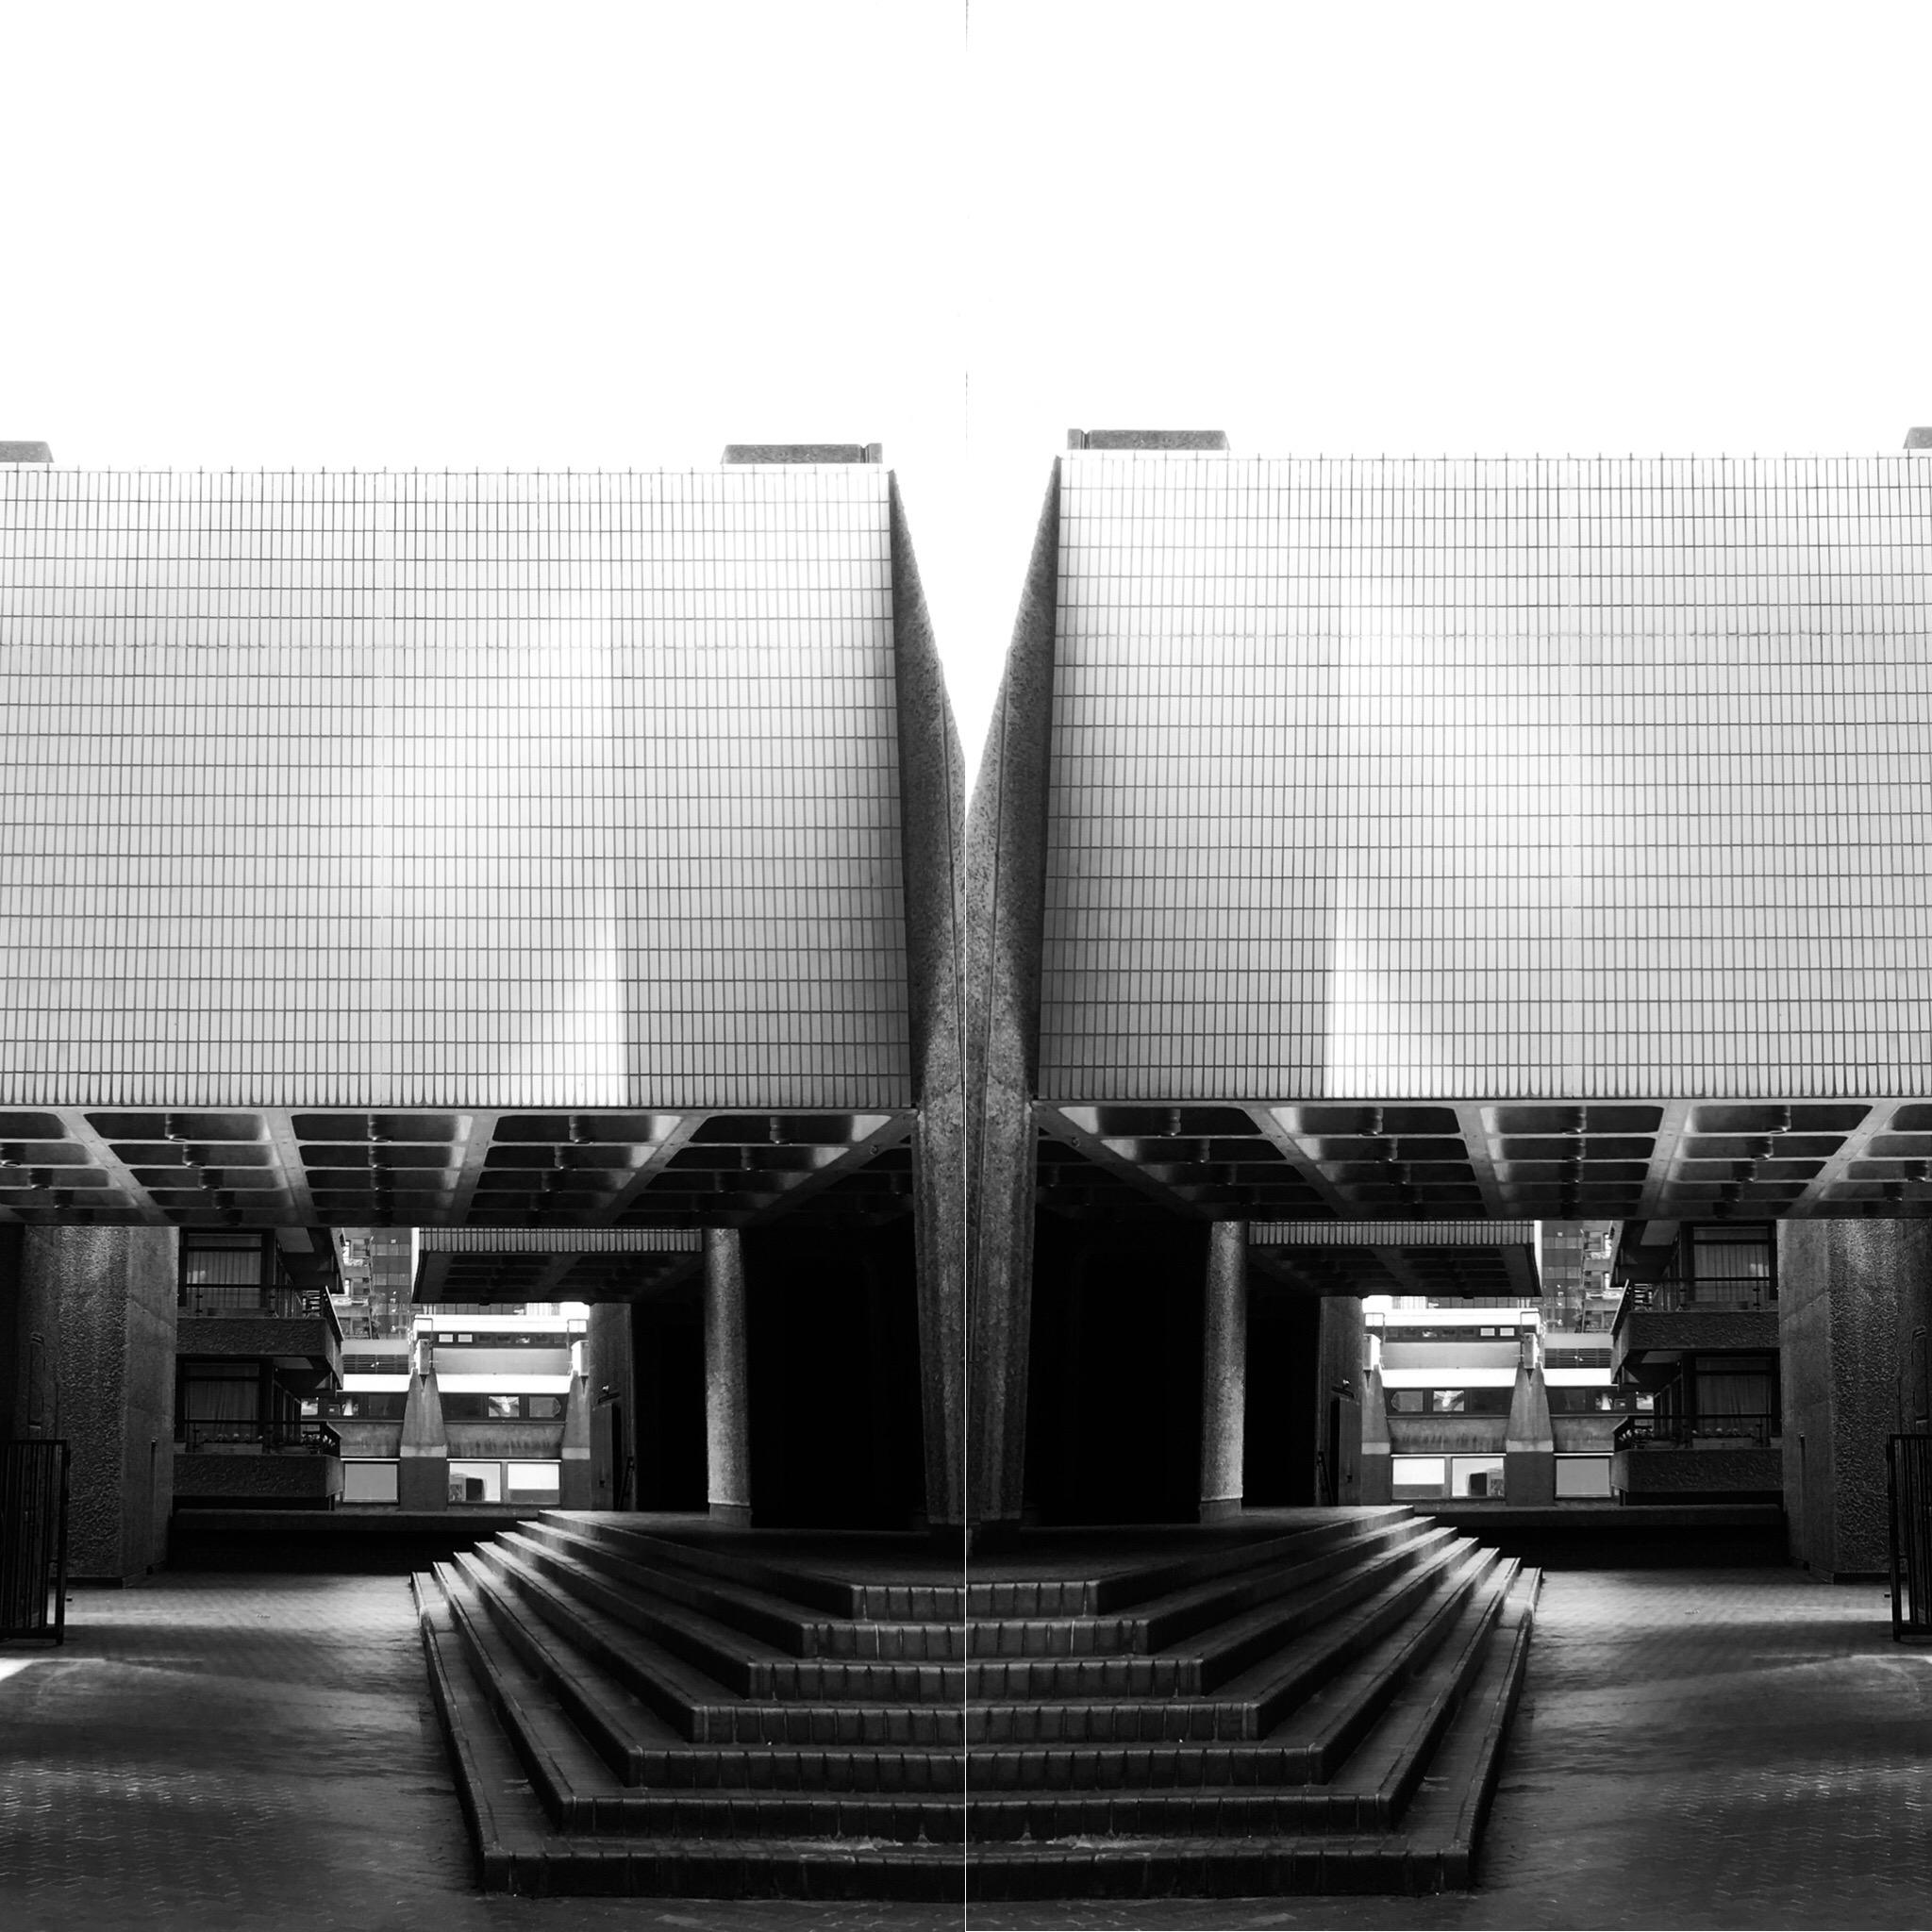 Hsu Yun Chin Abstract Photograph - Black & White Photography "Brutalism -Barbican Centre, London No15", 2020